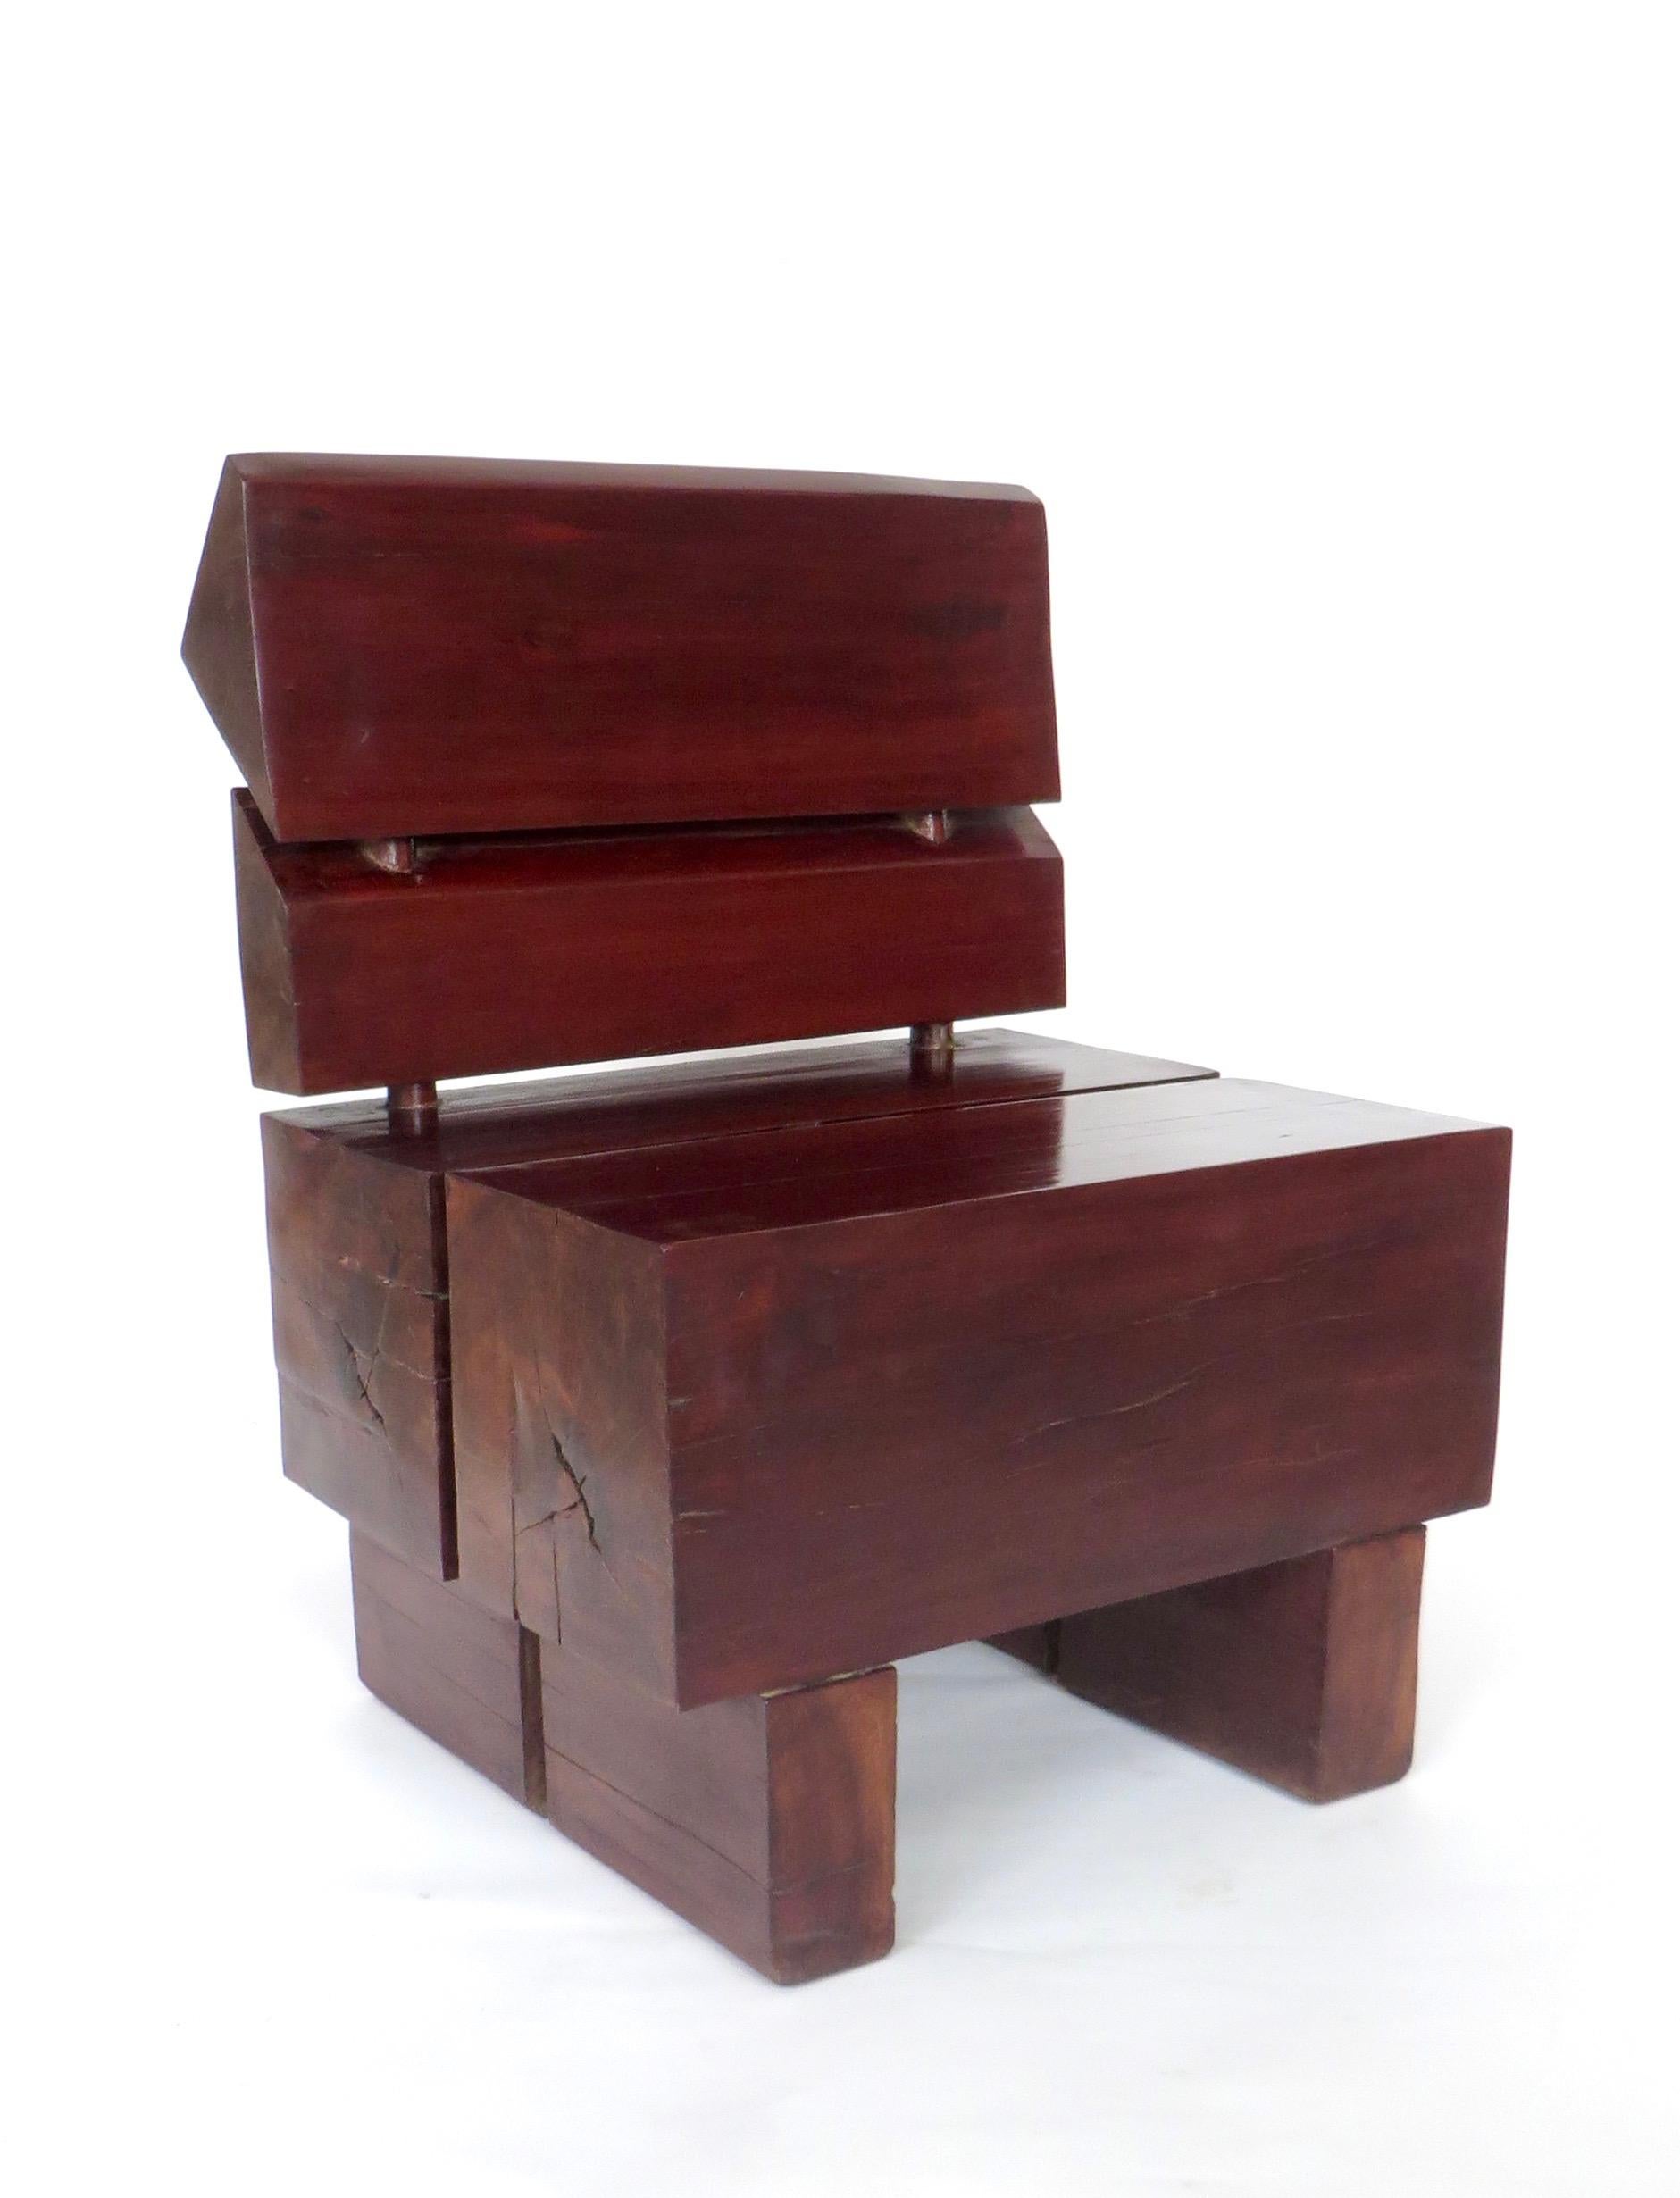 Mid-20th Century Brazilian Sculptural Low Organic Modernist Wood Chair